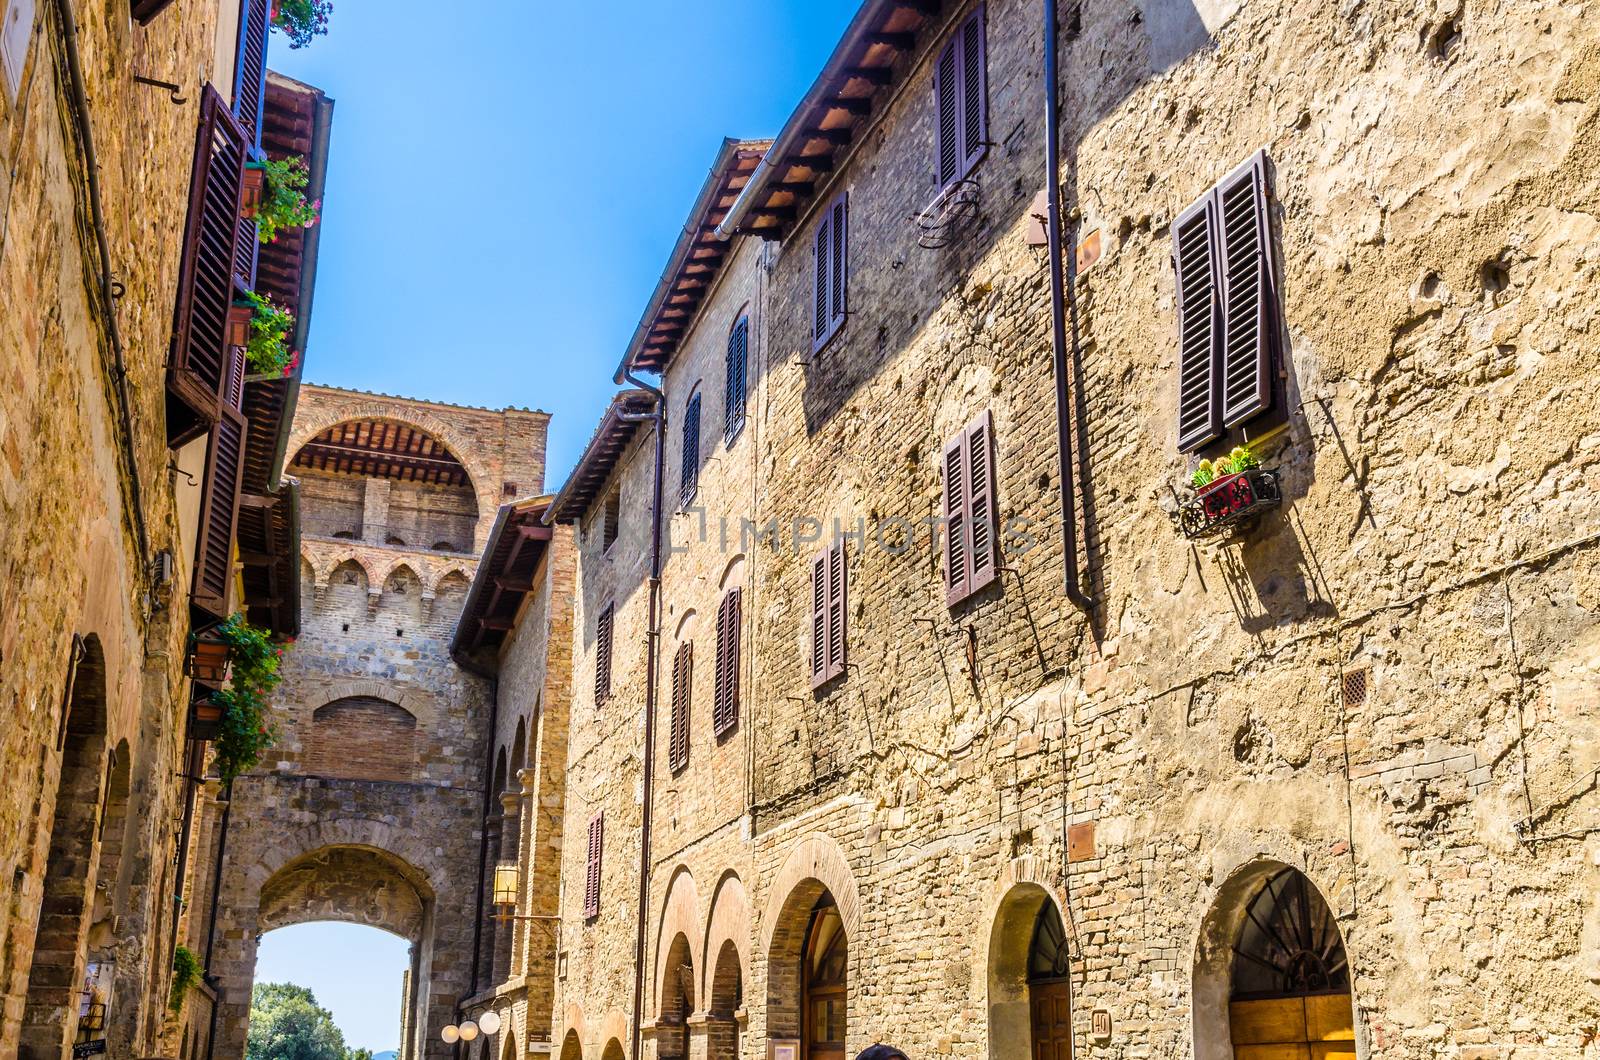 San Gimignano and its famous towers, Siena, Tuscany, Italy by mauricallari